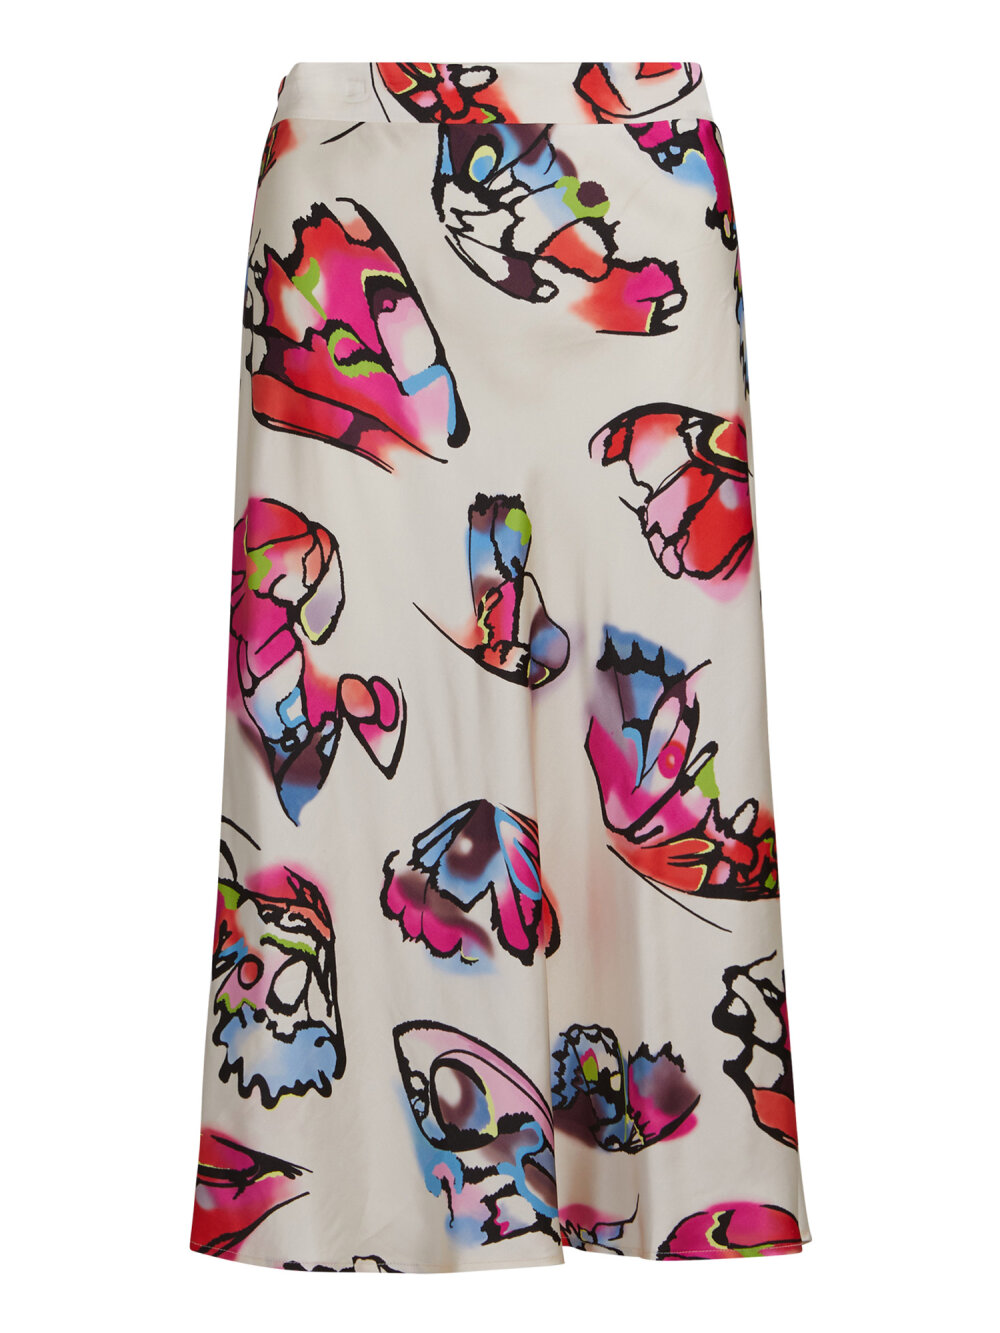 Coster Copenhagen - Skirt in butterfly print